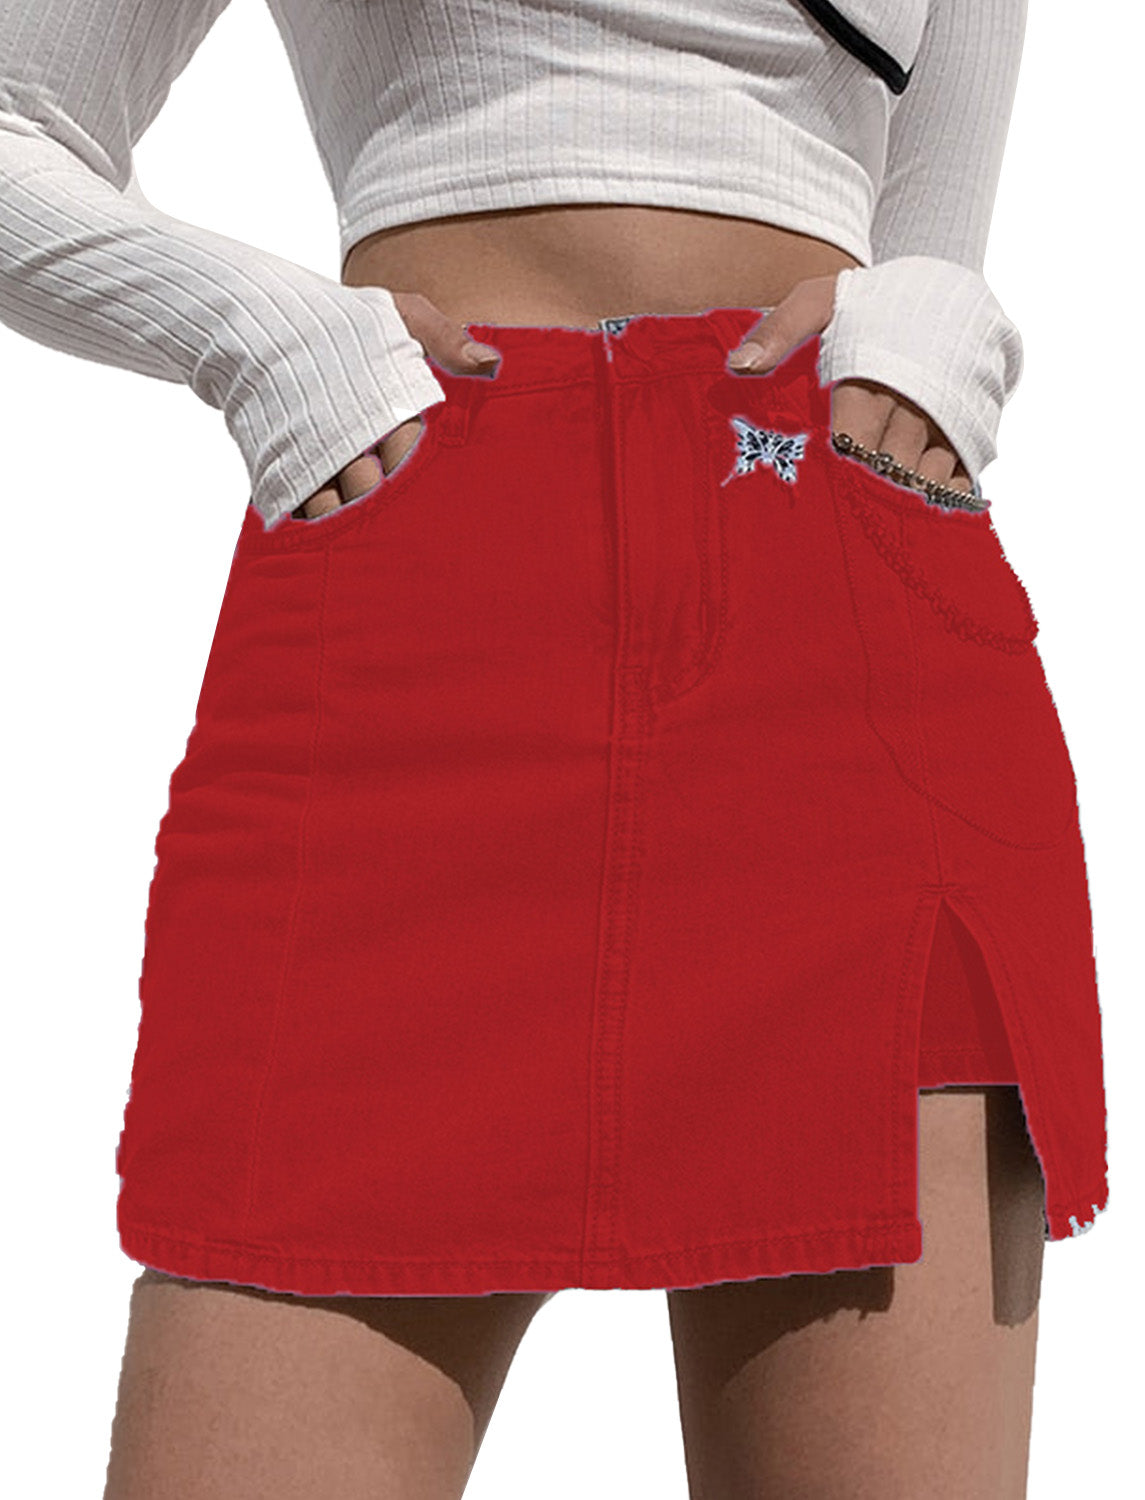 LC7811027-103-S, LC7811027-103-M, LC7811027-103-L, LC7811027-103-XL, LC7811027-103-2XL, True Red Women's Casual Denim Skirt High Waist Casual Mini Skirts